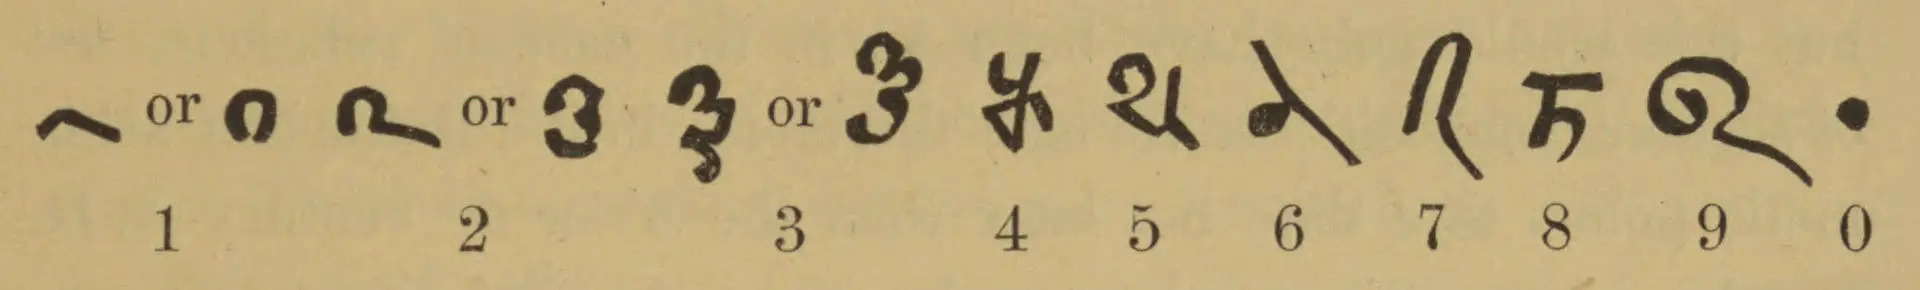 Bakhshali numerals 1